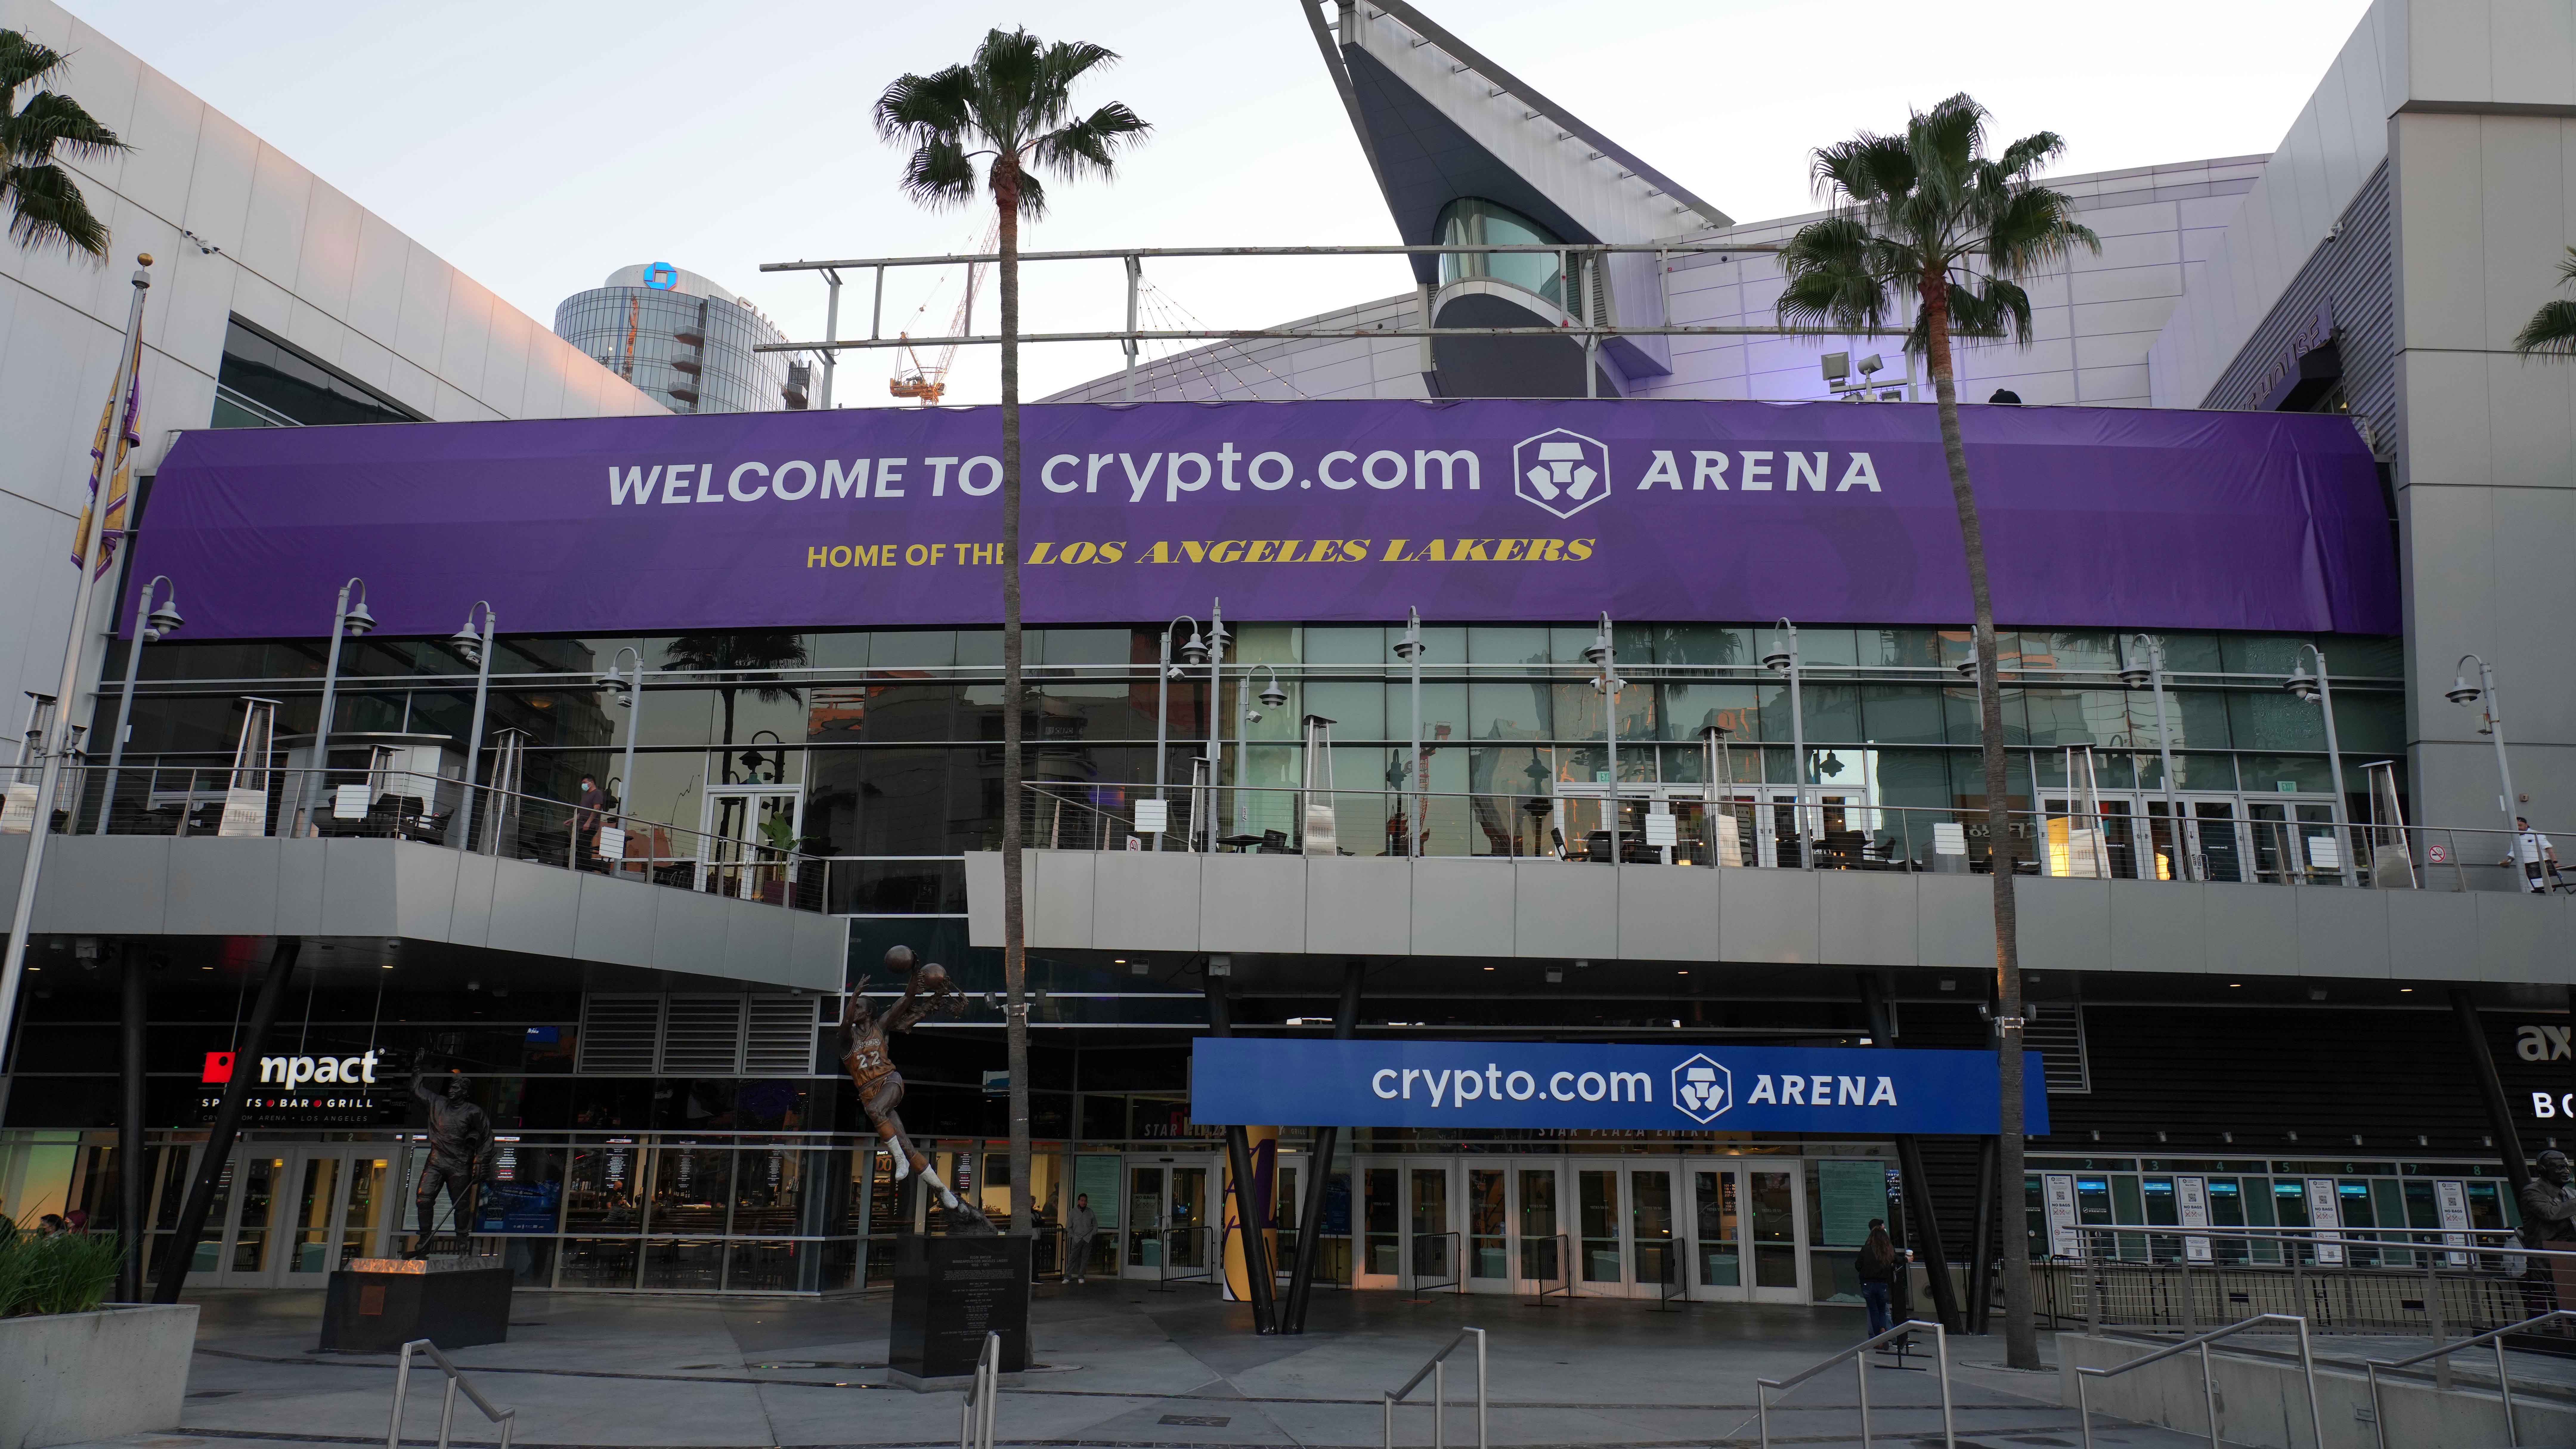 PHOTOS: Rams players visit Los Angeles Kings at Crypto.com Arena